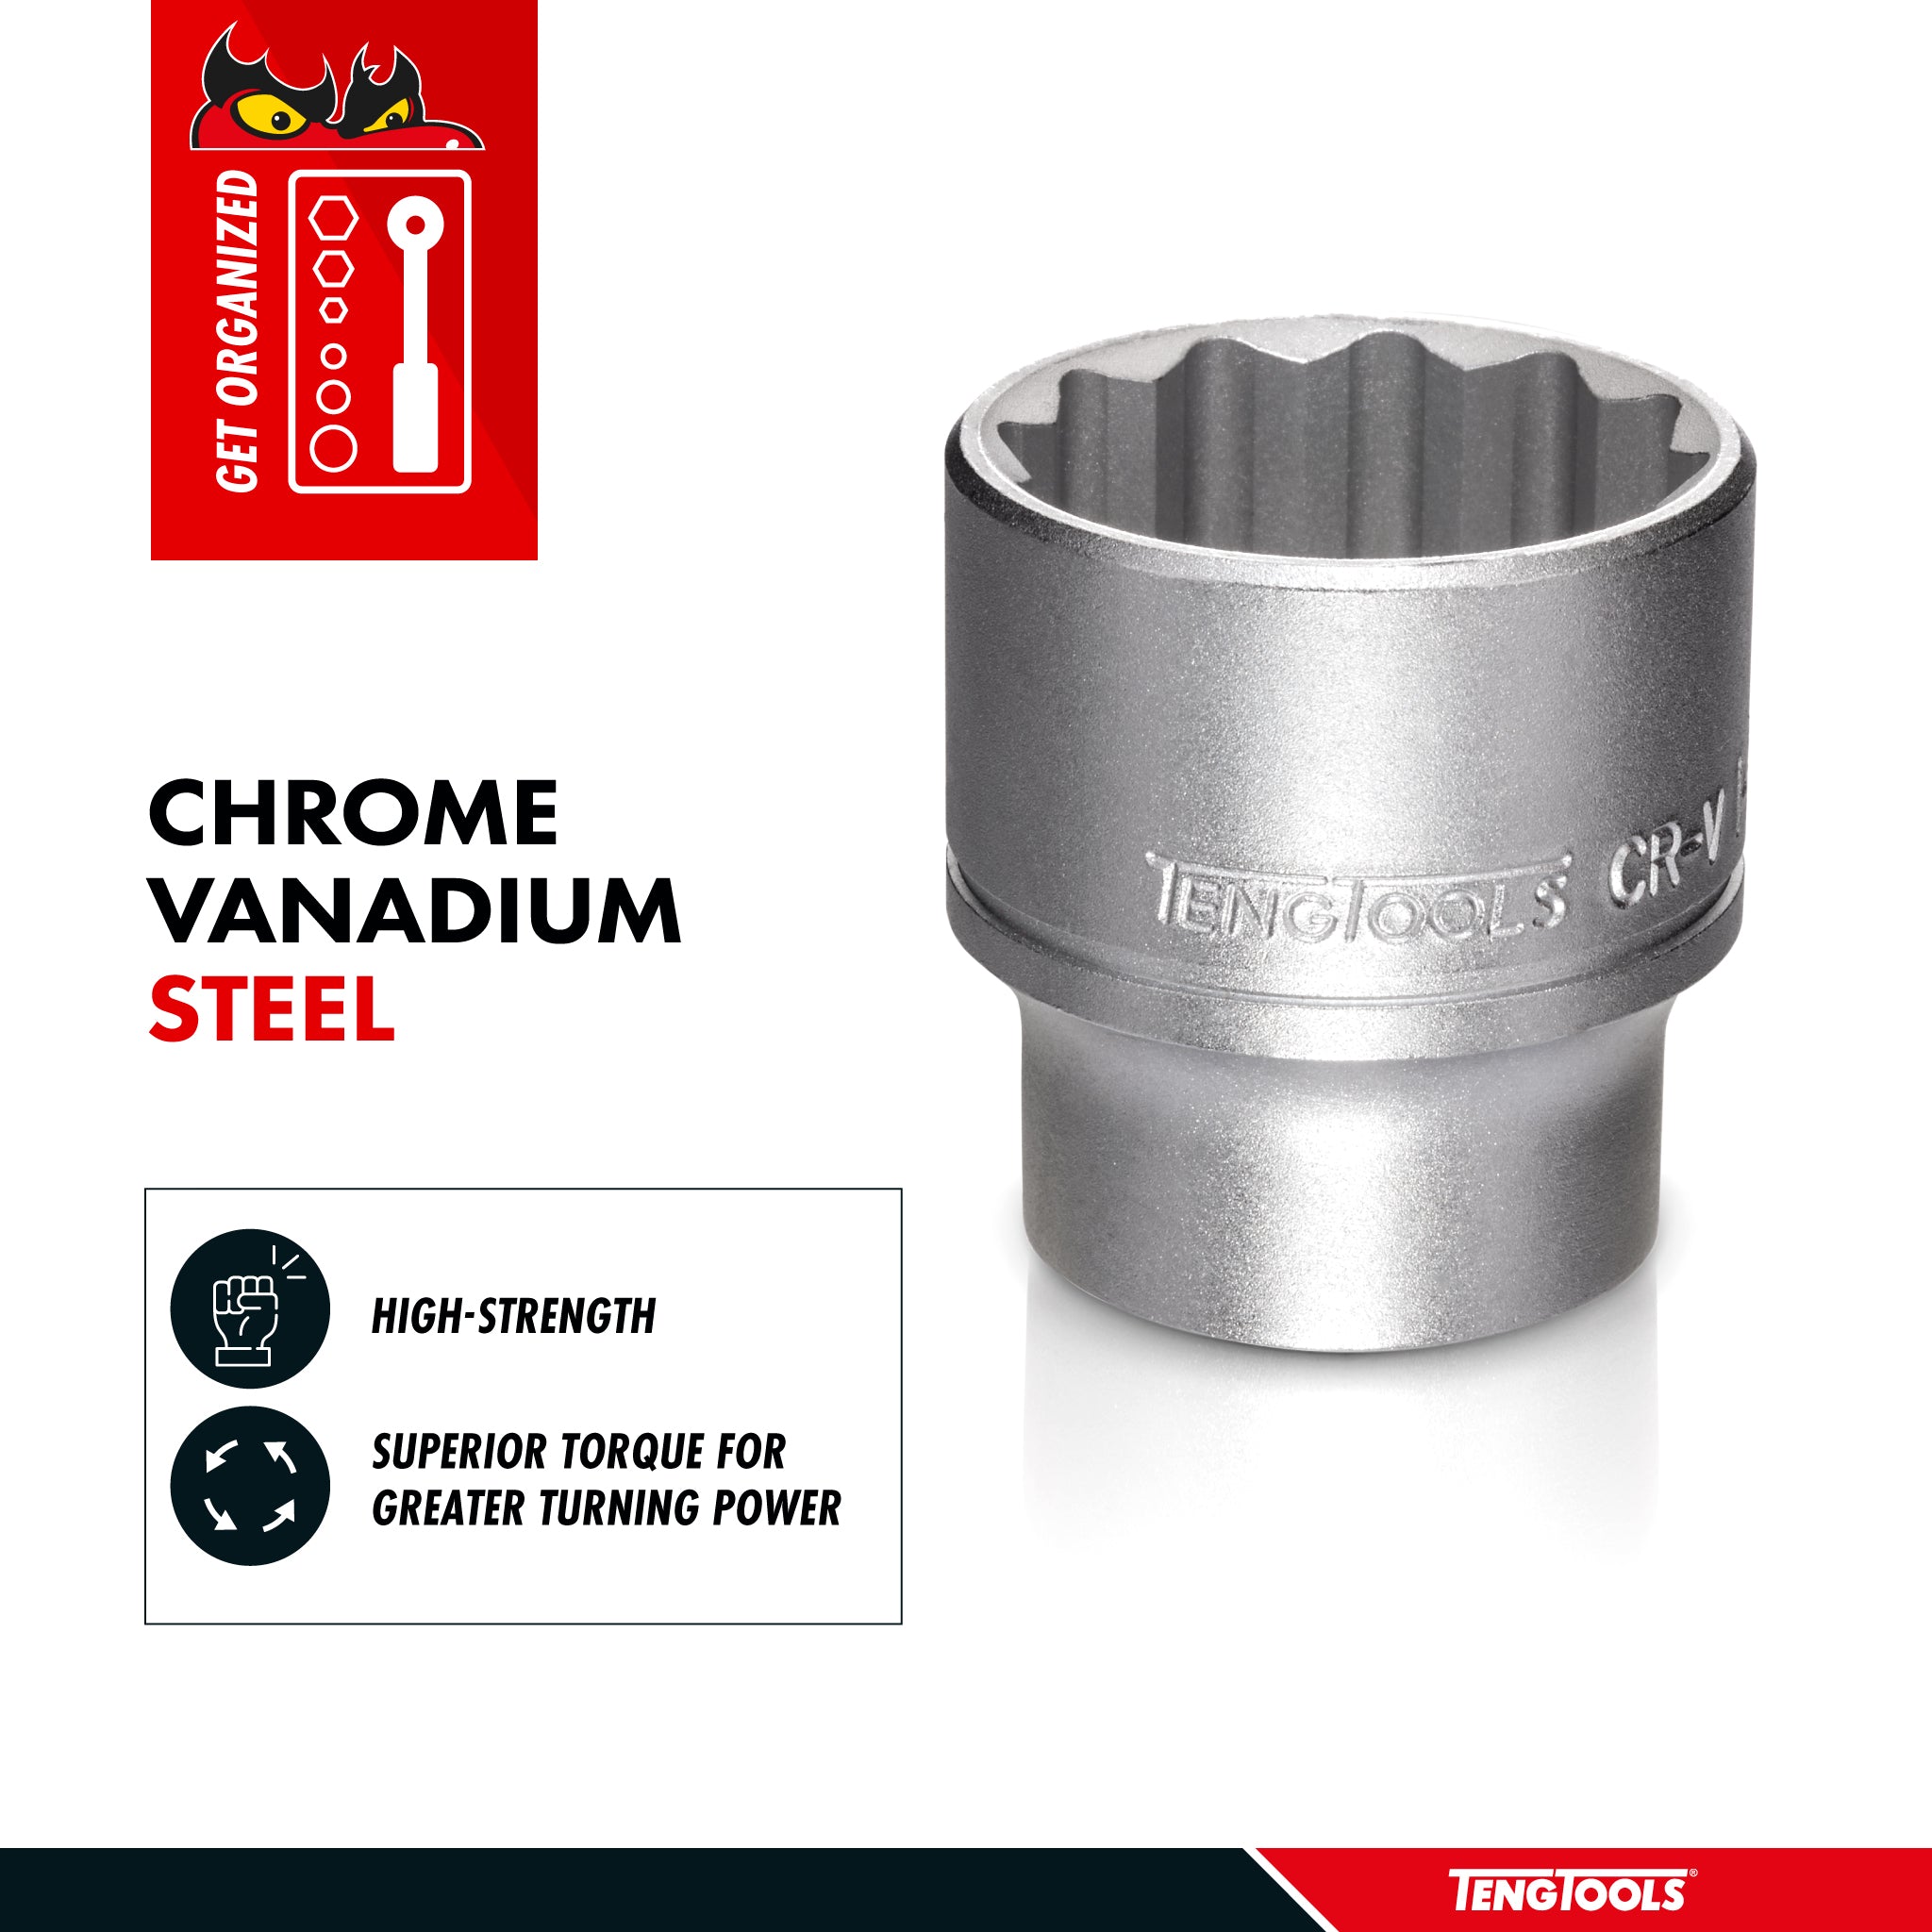 Teng Tools 1/2 Inch Drive 12 Point Metric Shallow Chrome Vanadium Sockets - 26mm